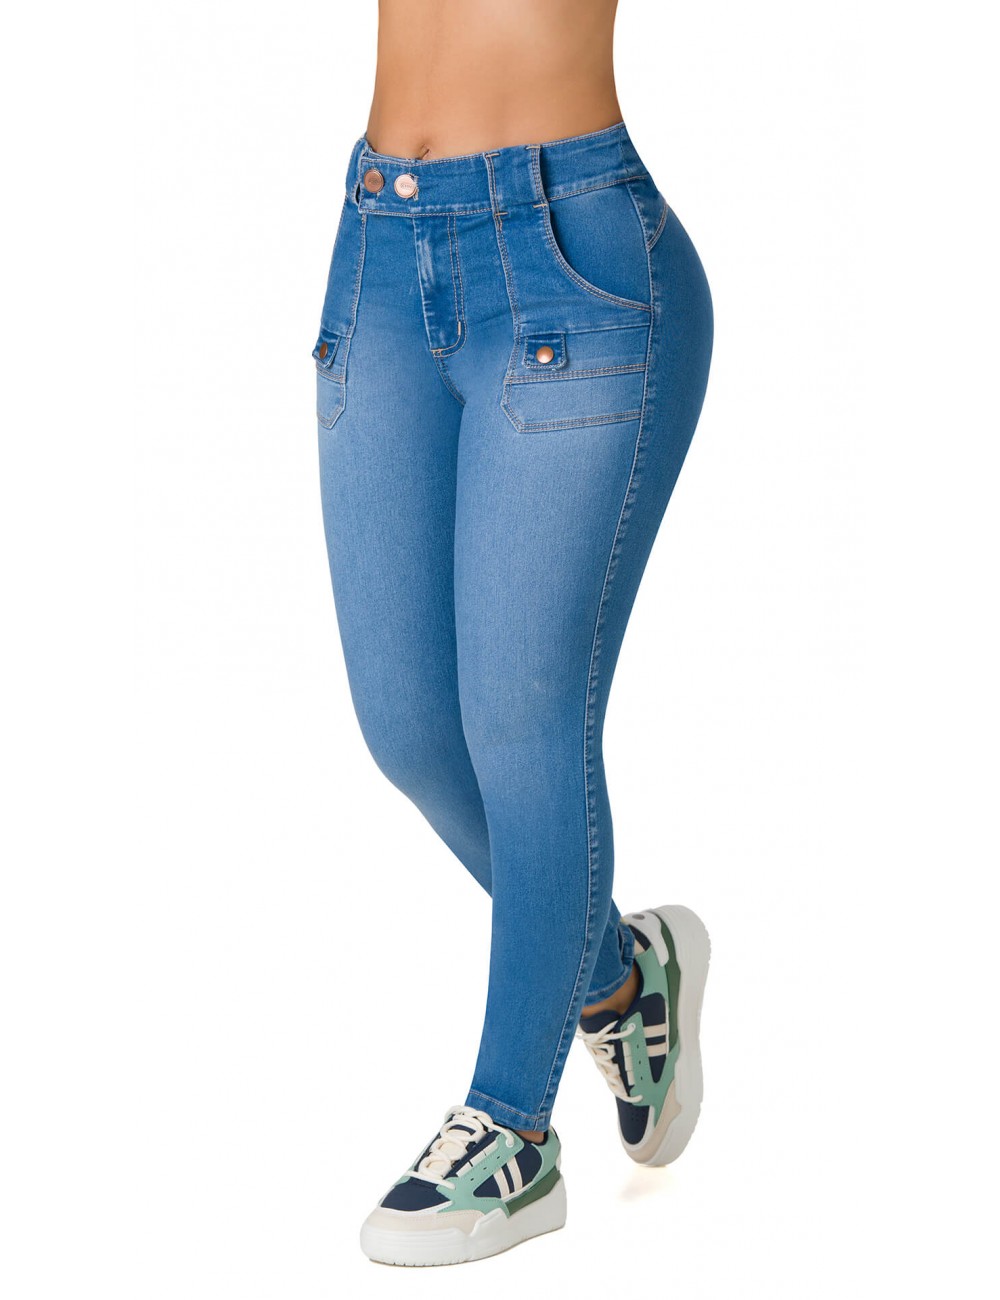 Jacinda Jeans Skinny Butt Lifter Super Waist 70171TCT-N